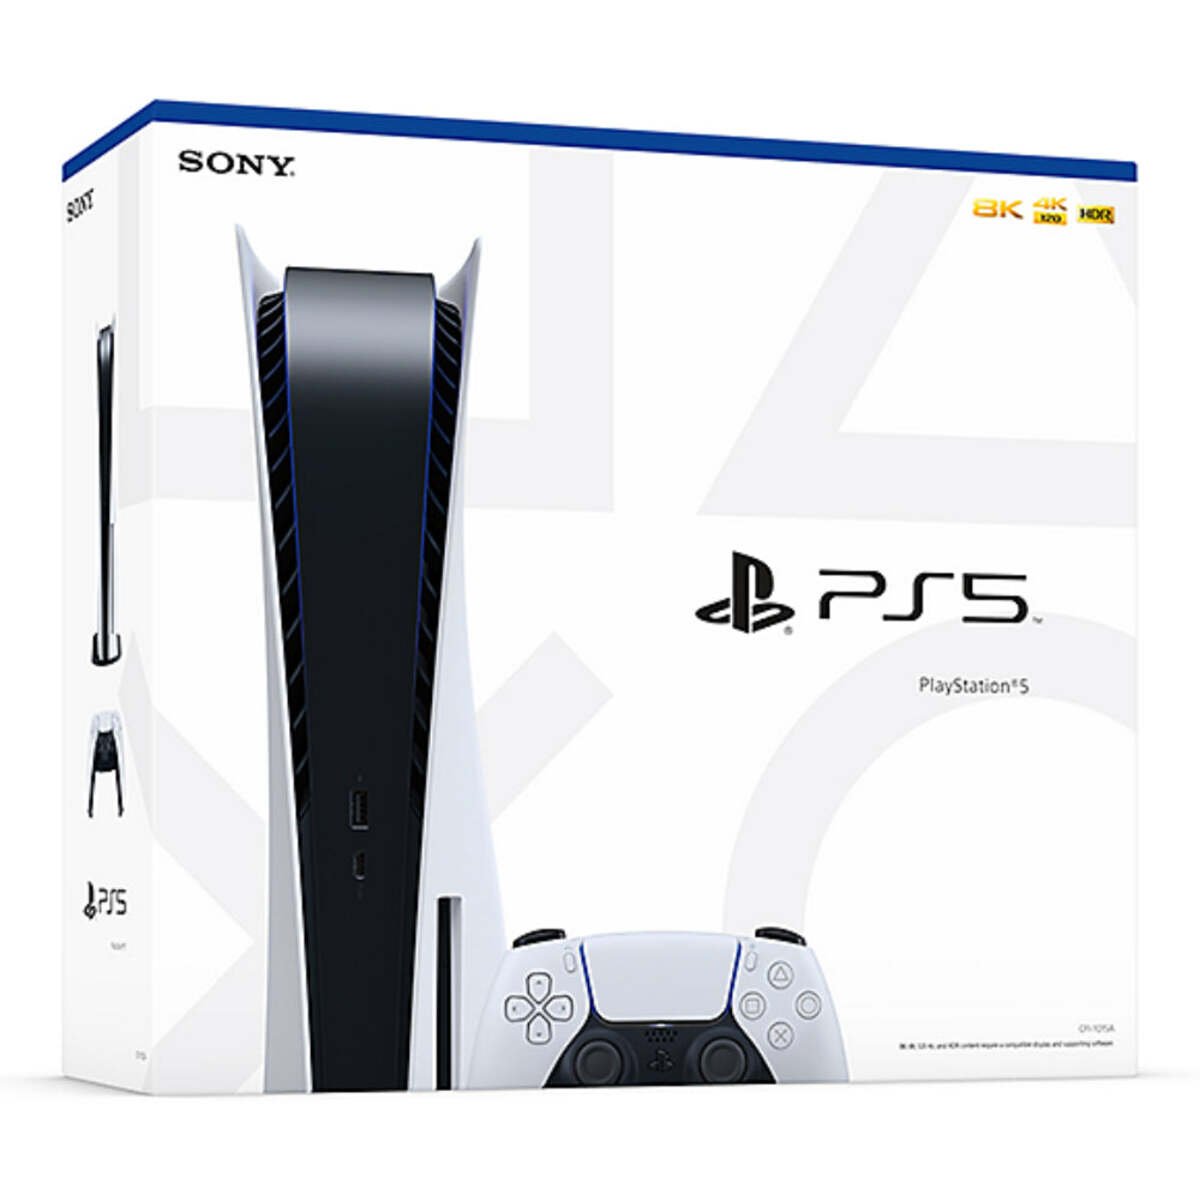 Sony Playstation 5 Standard/disc Edition Console - International Version